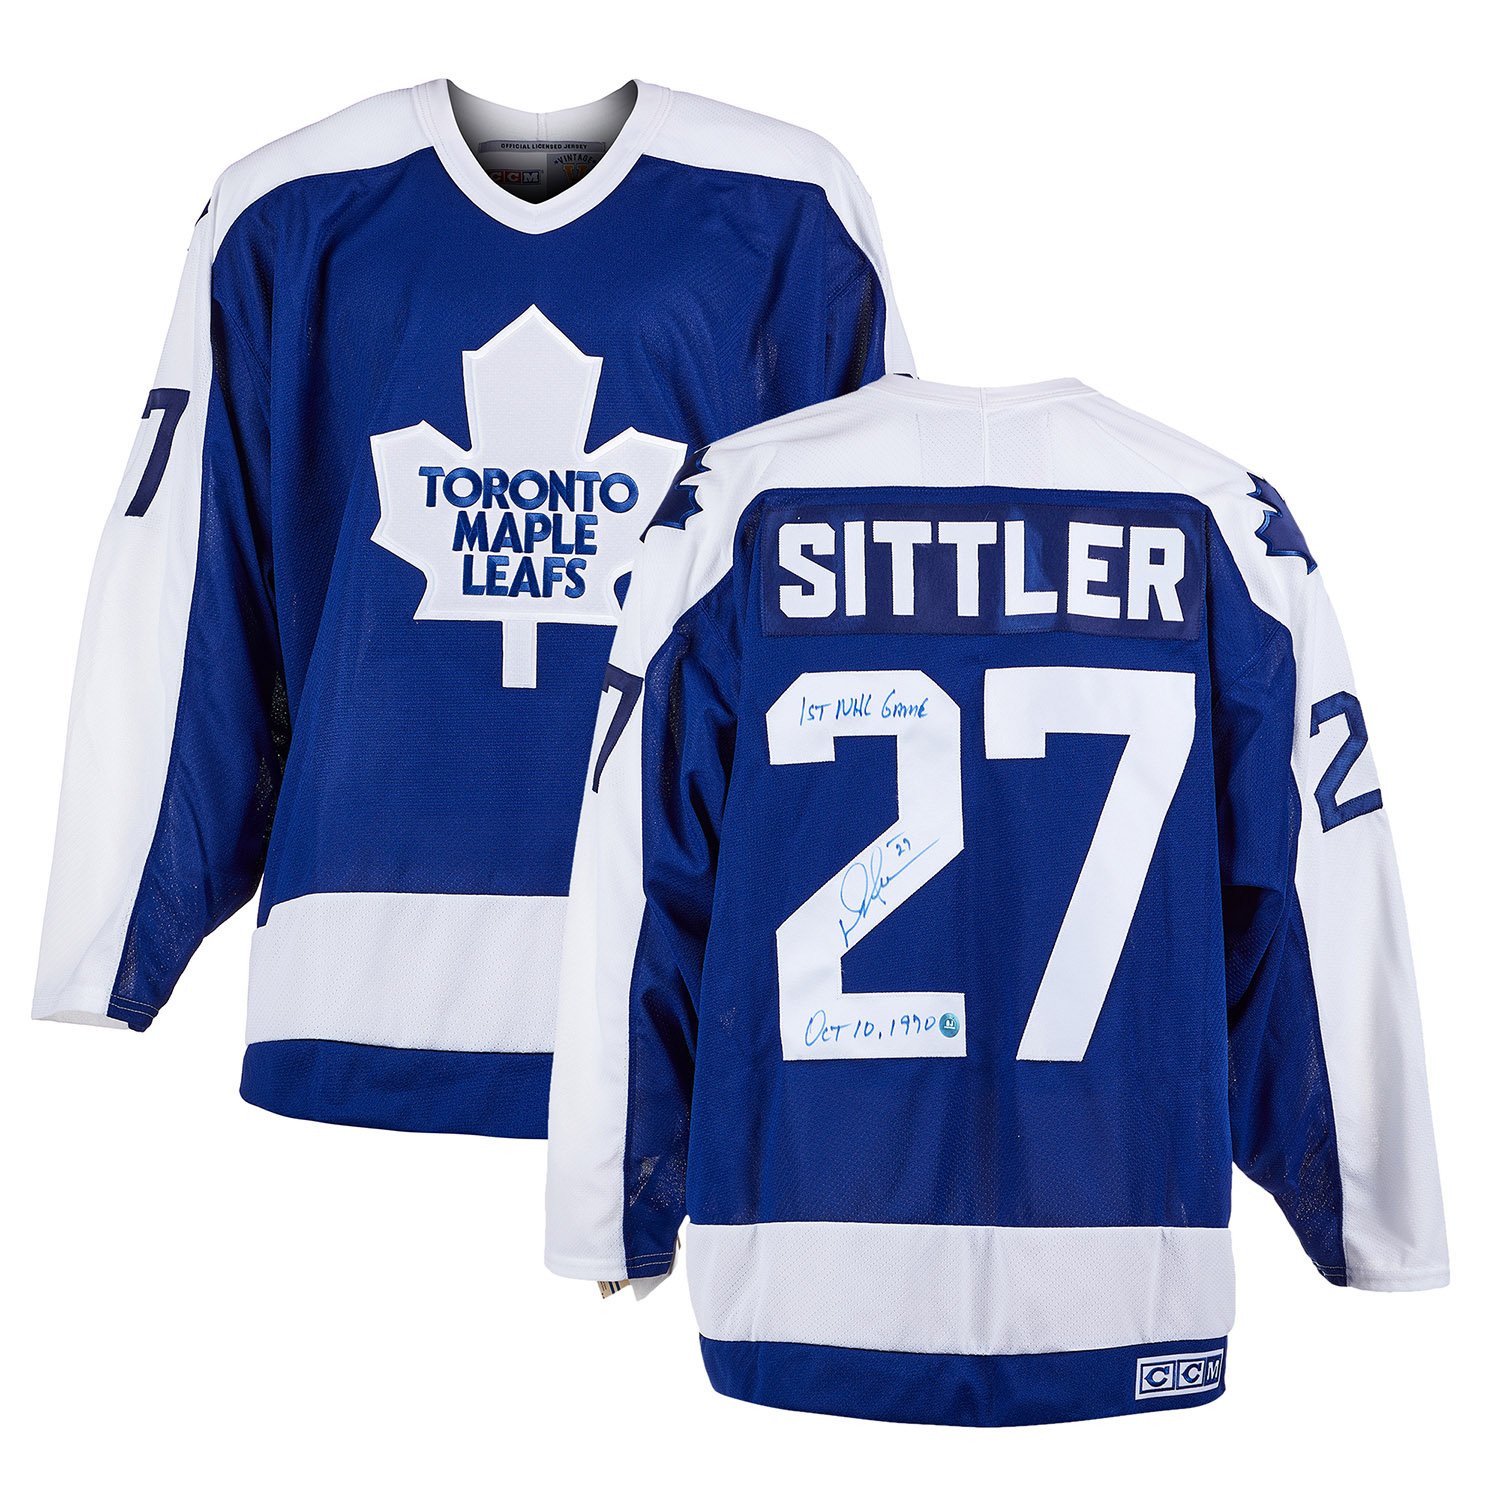 Darryl Sittler Toronto Maple Leafs Signed Jersey Hockey Collector